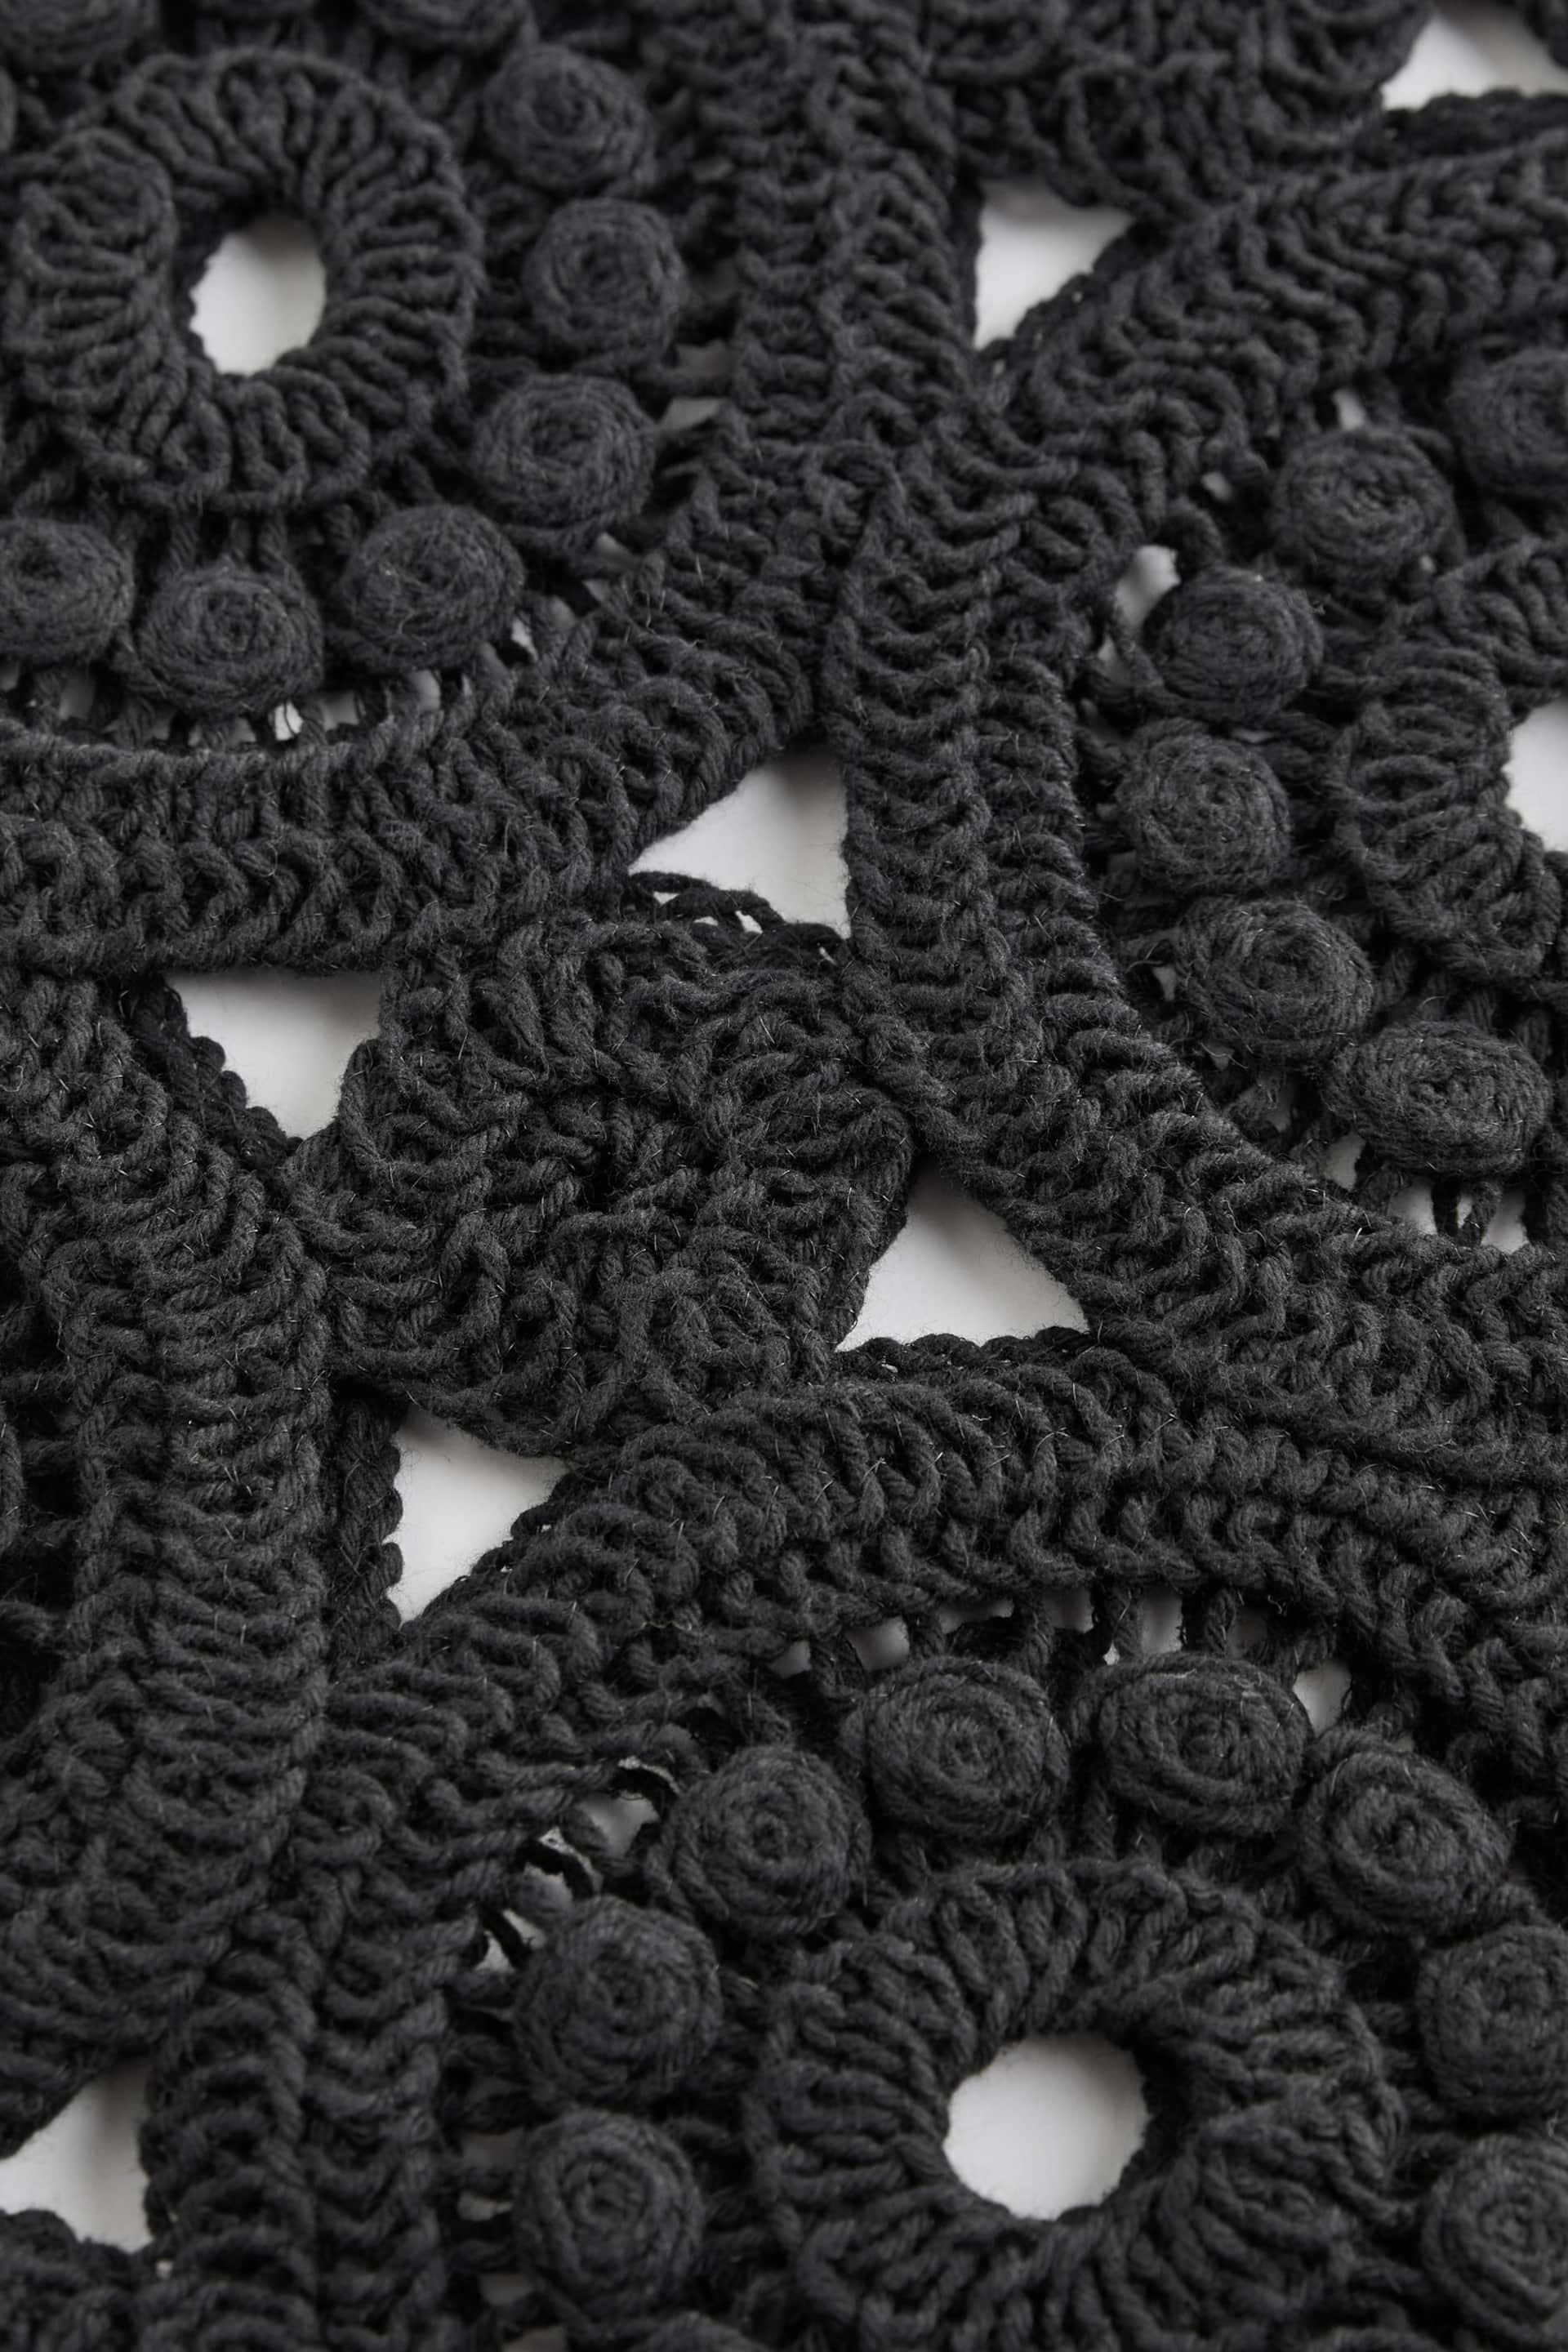 Black Mini Crochet Cover-Up Dress - Image 8 of 8